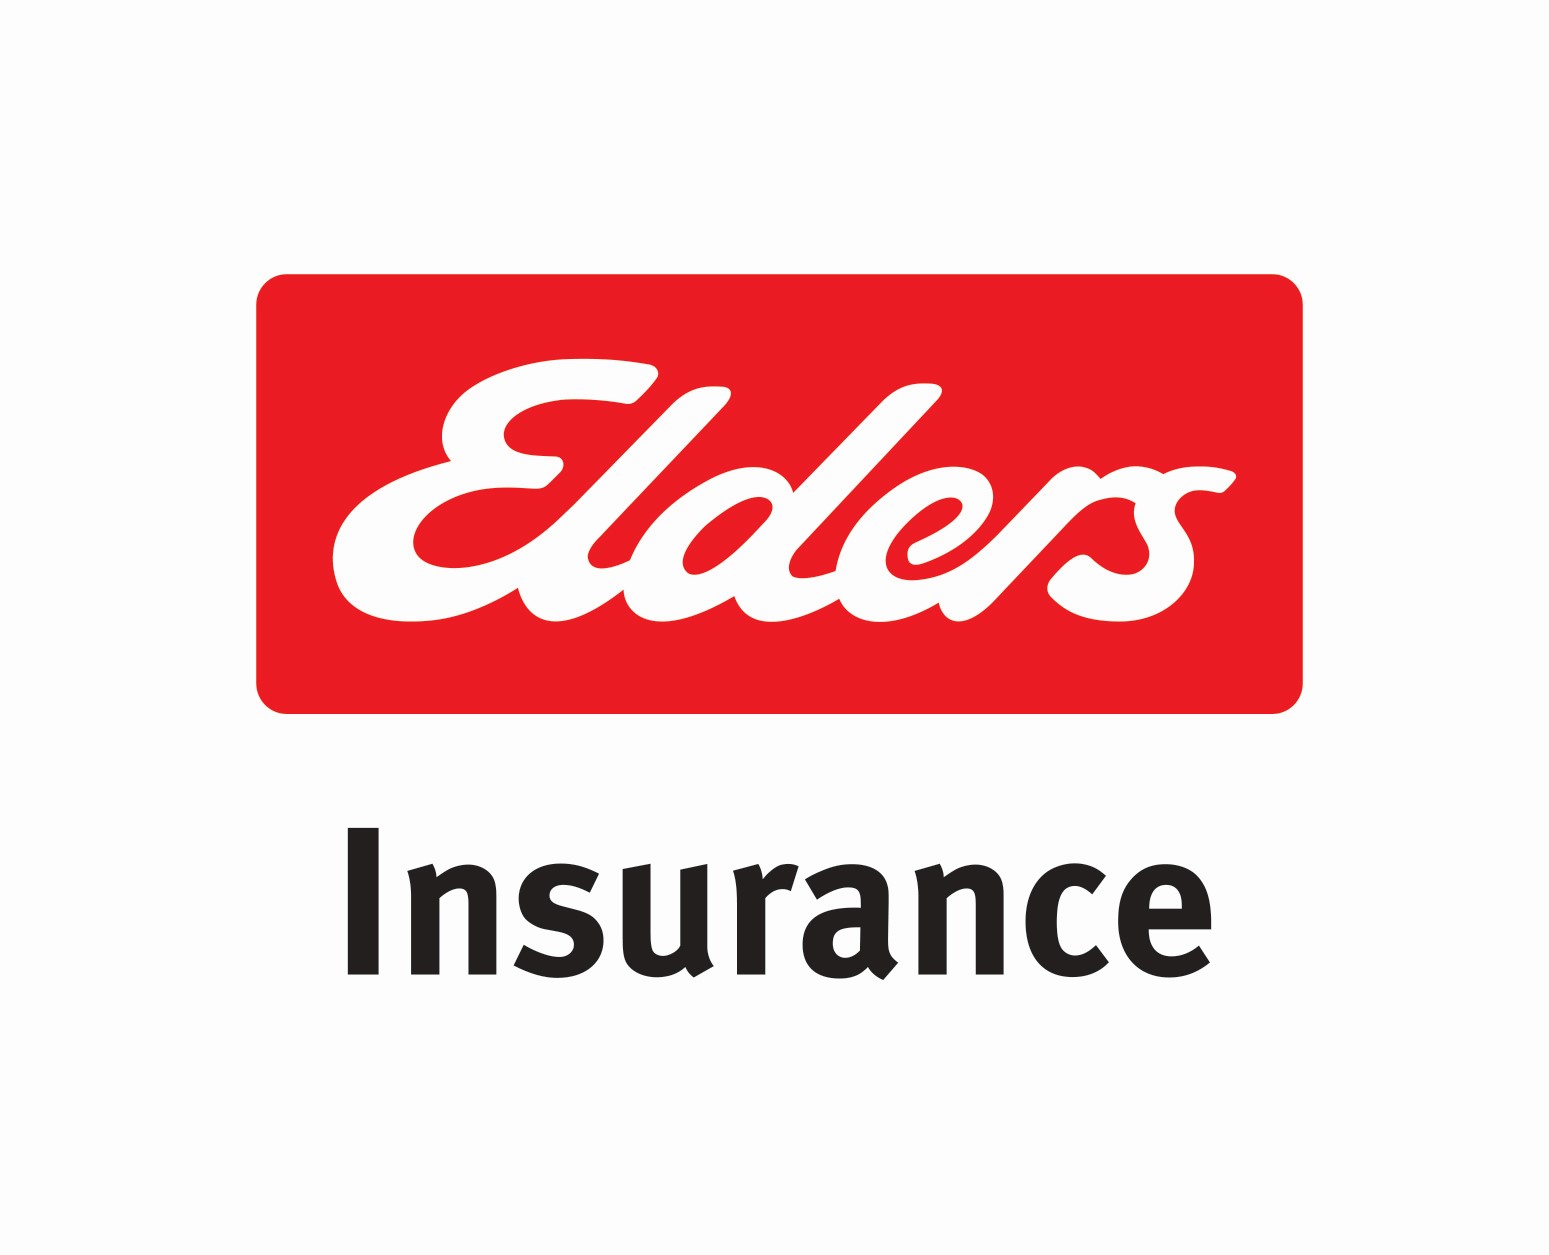 Elders insurance singleton